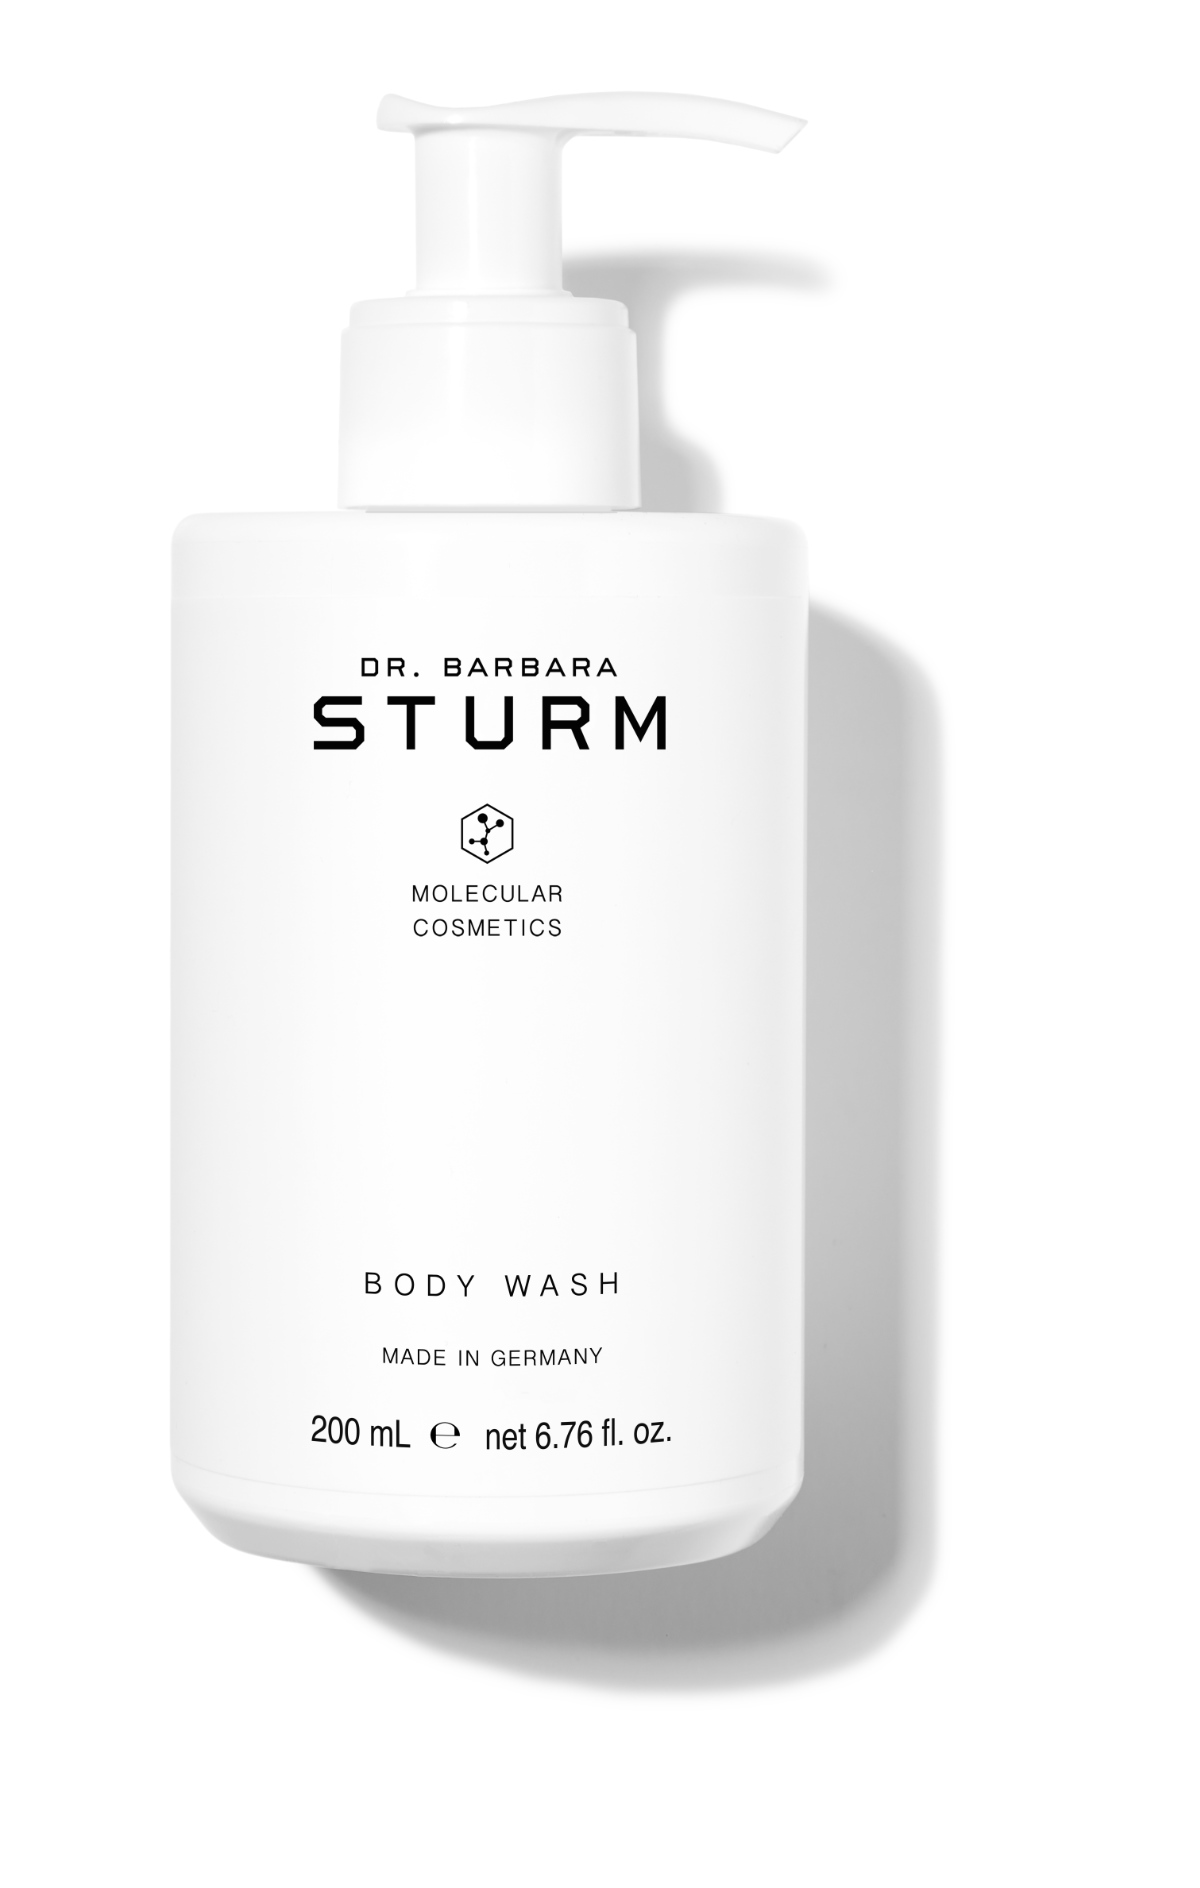 Introducing Dr. Barbara Sturm’s Body Wash